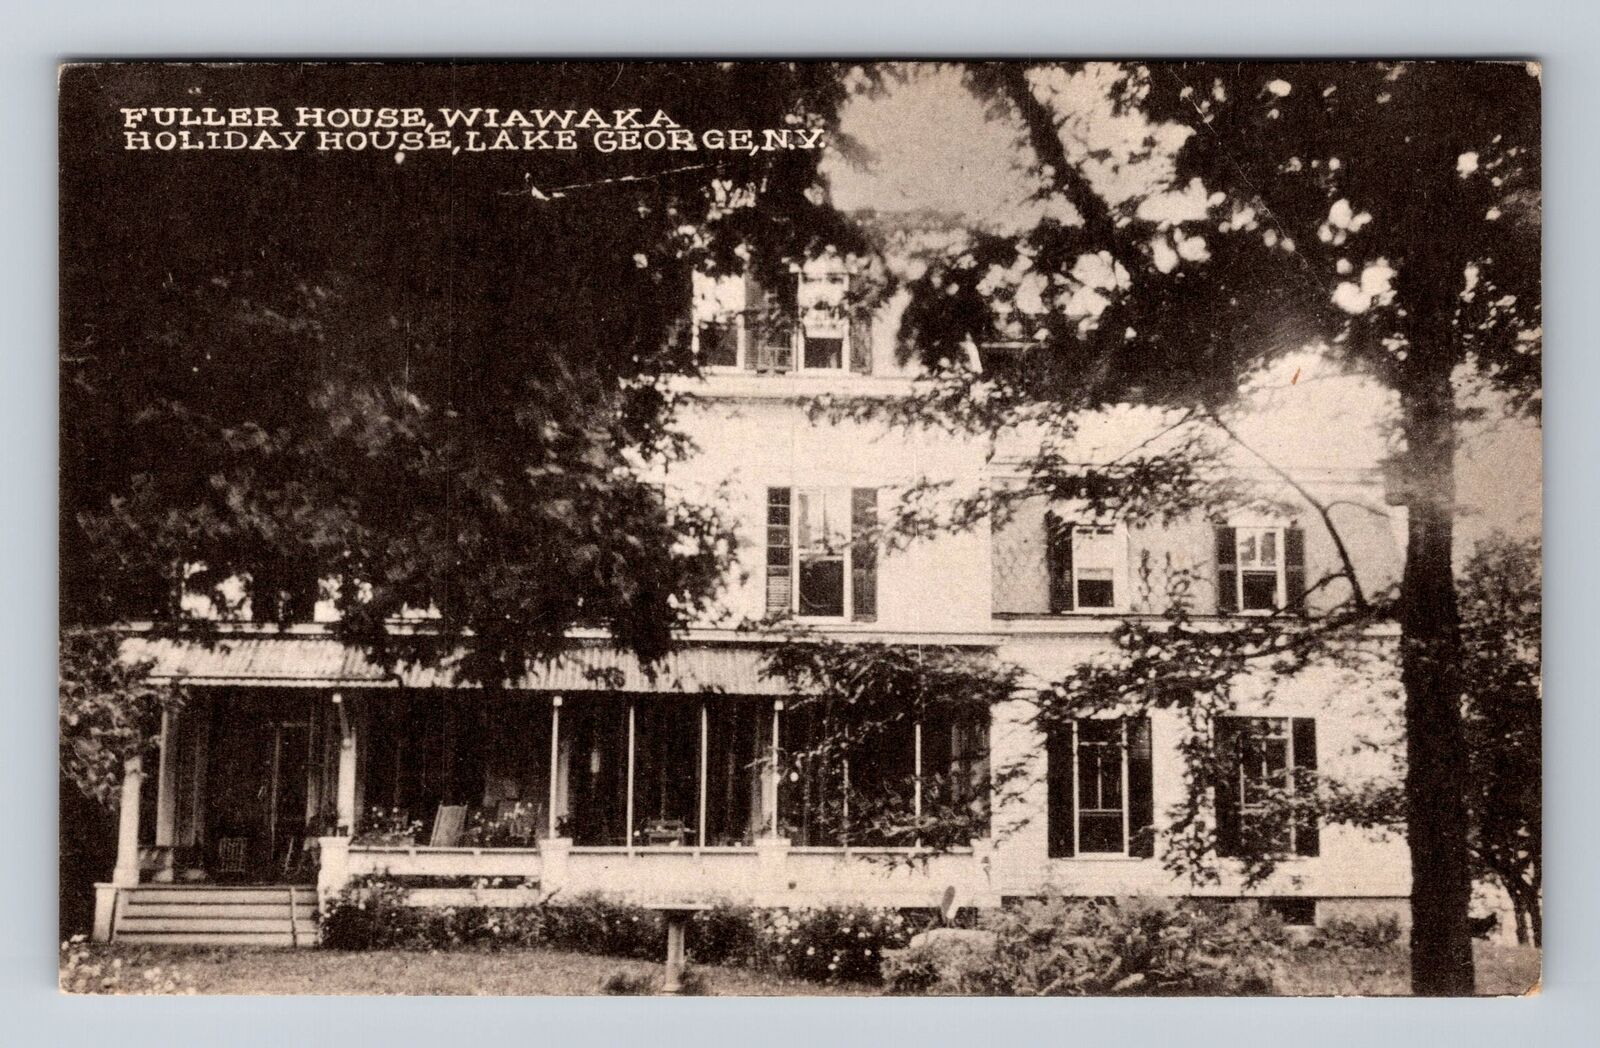 Lake George NY-New York, Fuller House, Wiawaka Holiday House, Vintage Postcard